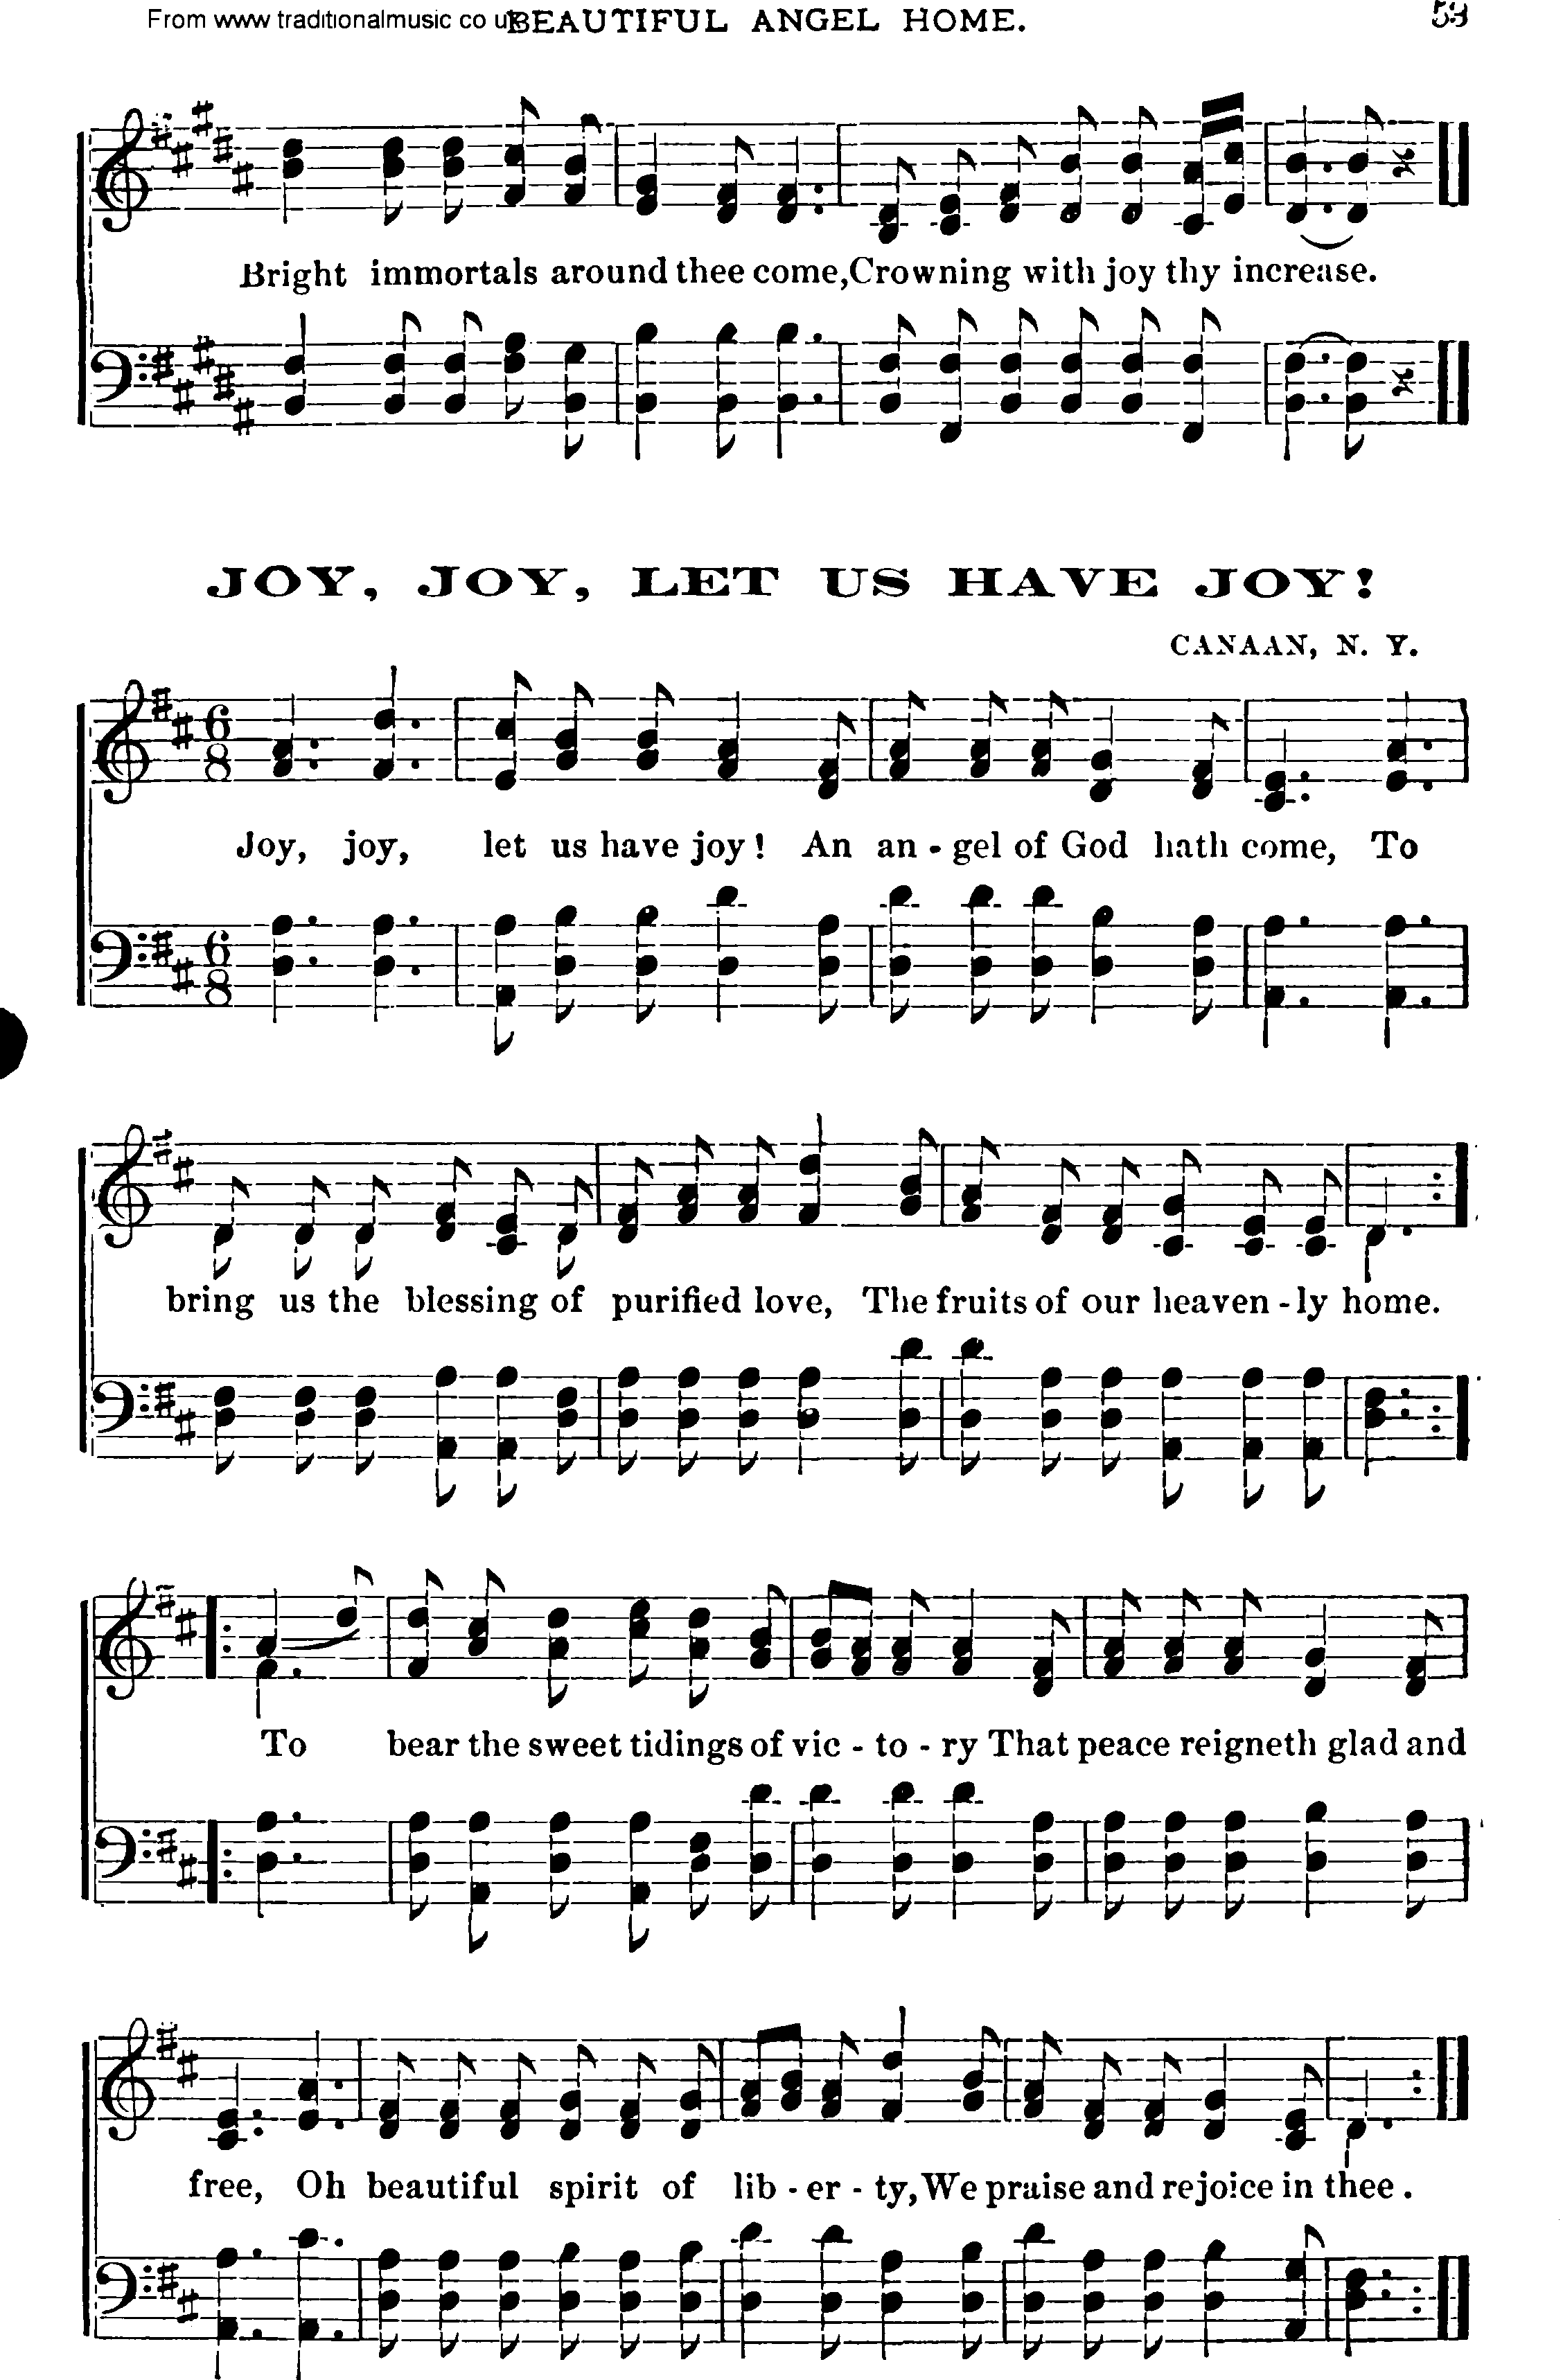 Shaker Music collection, Hymn: Joy, Joy, Let Us Have Joy, sheetmusic and PDF